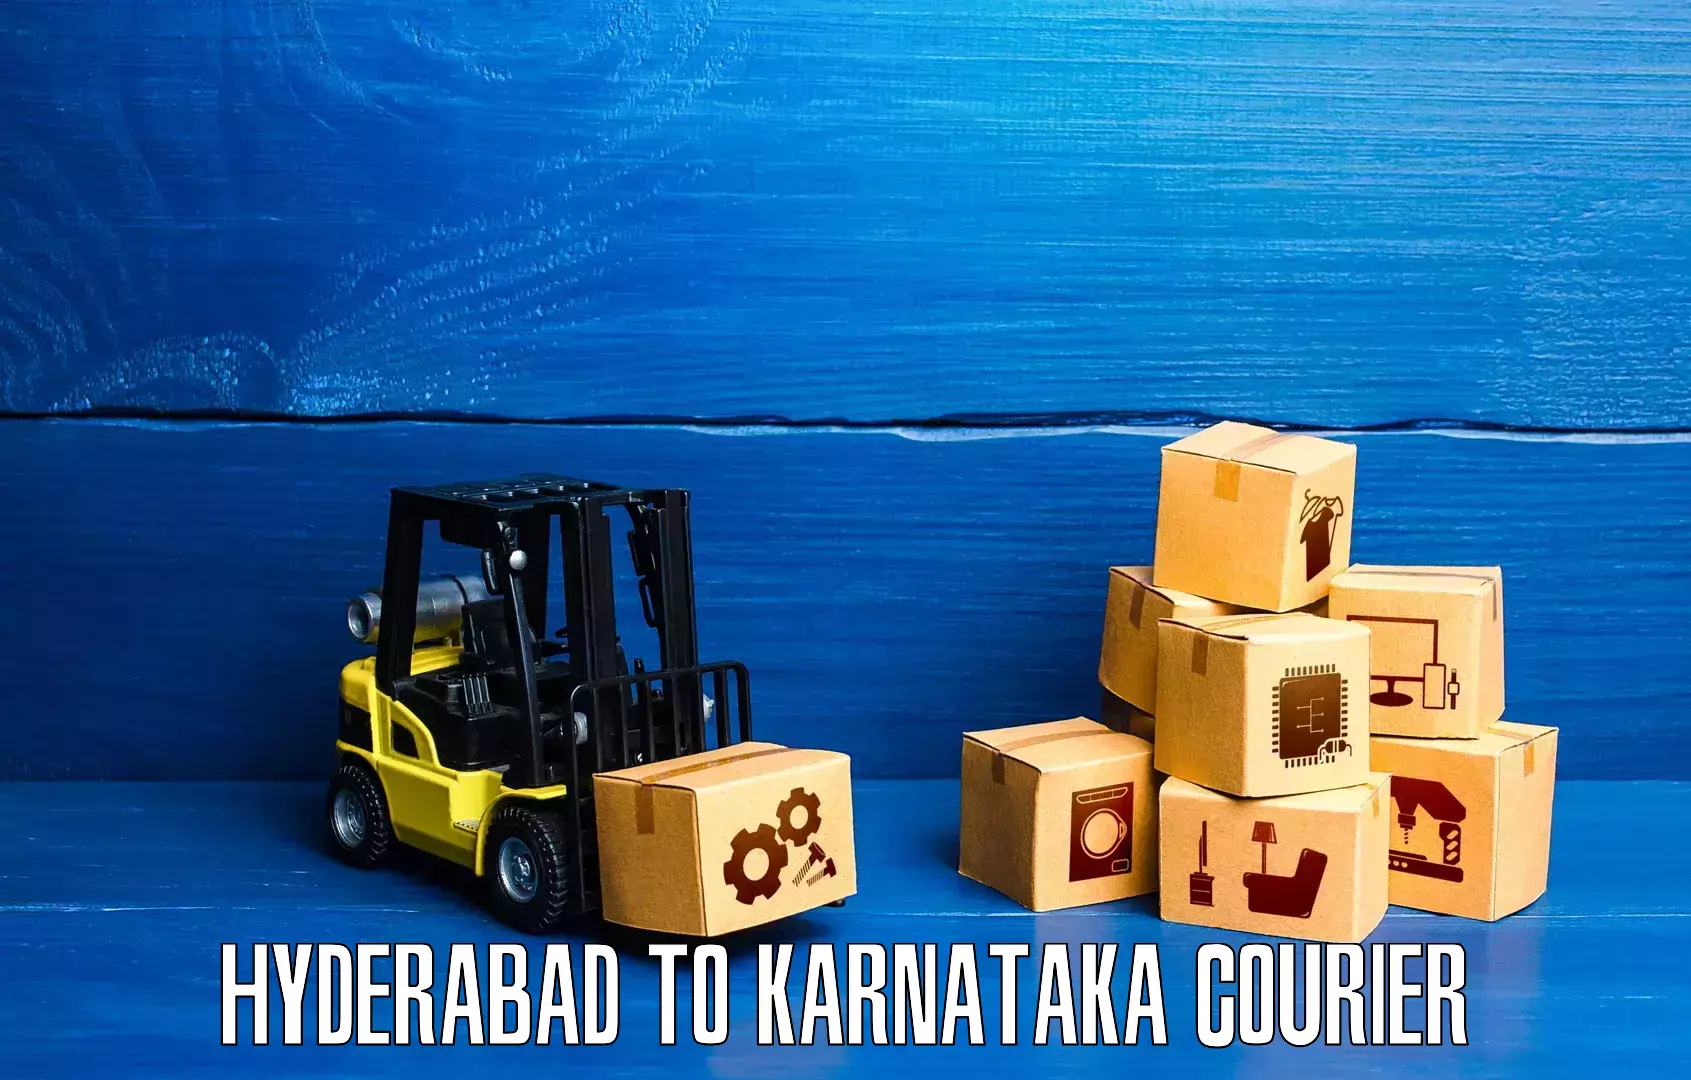 Global logistics network Hyderabad to Karkala